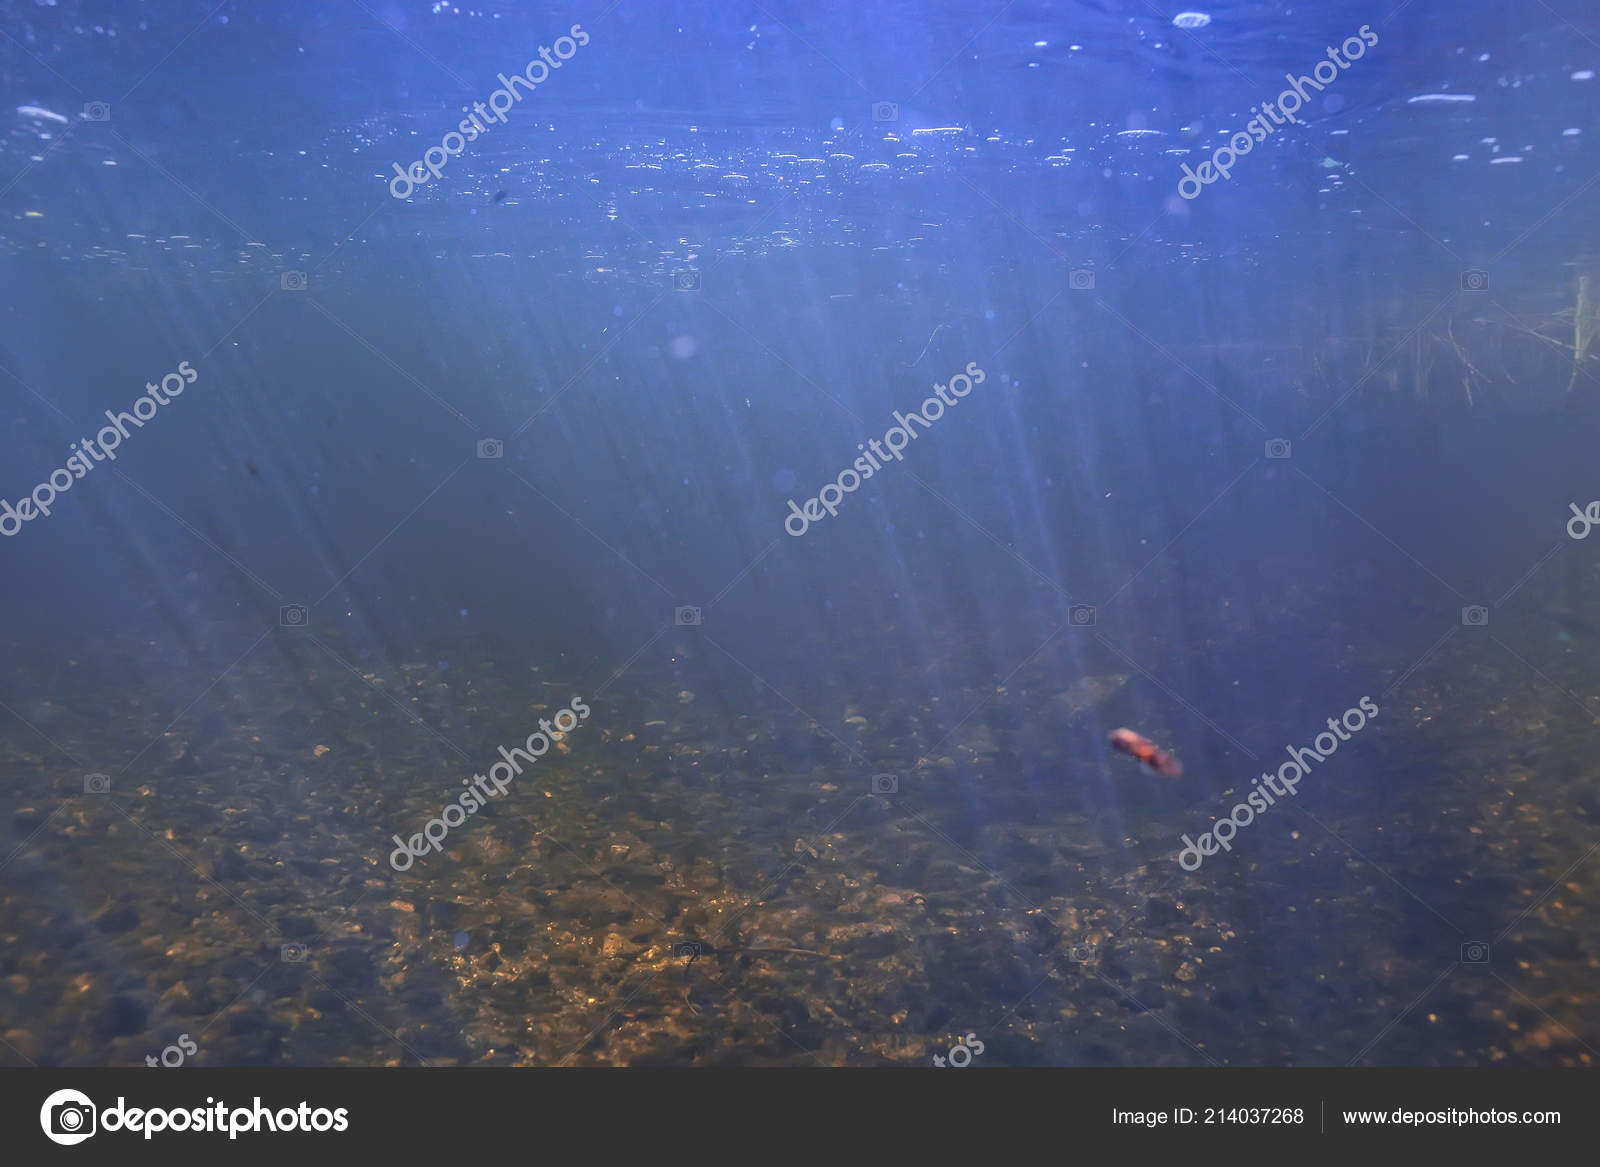 https://st4.depositphotos.com/1400069/21403/i/1600/depositphotos_214037268-stock-photo-underwater-texture-water-lake-underwater.jpg